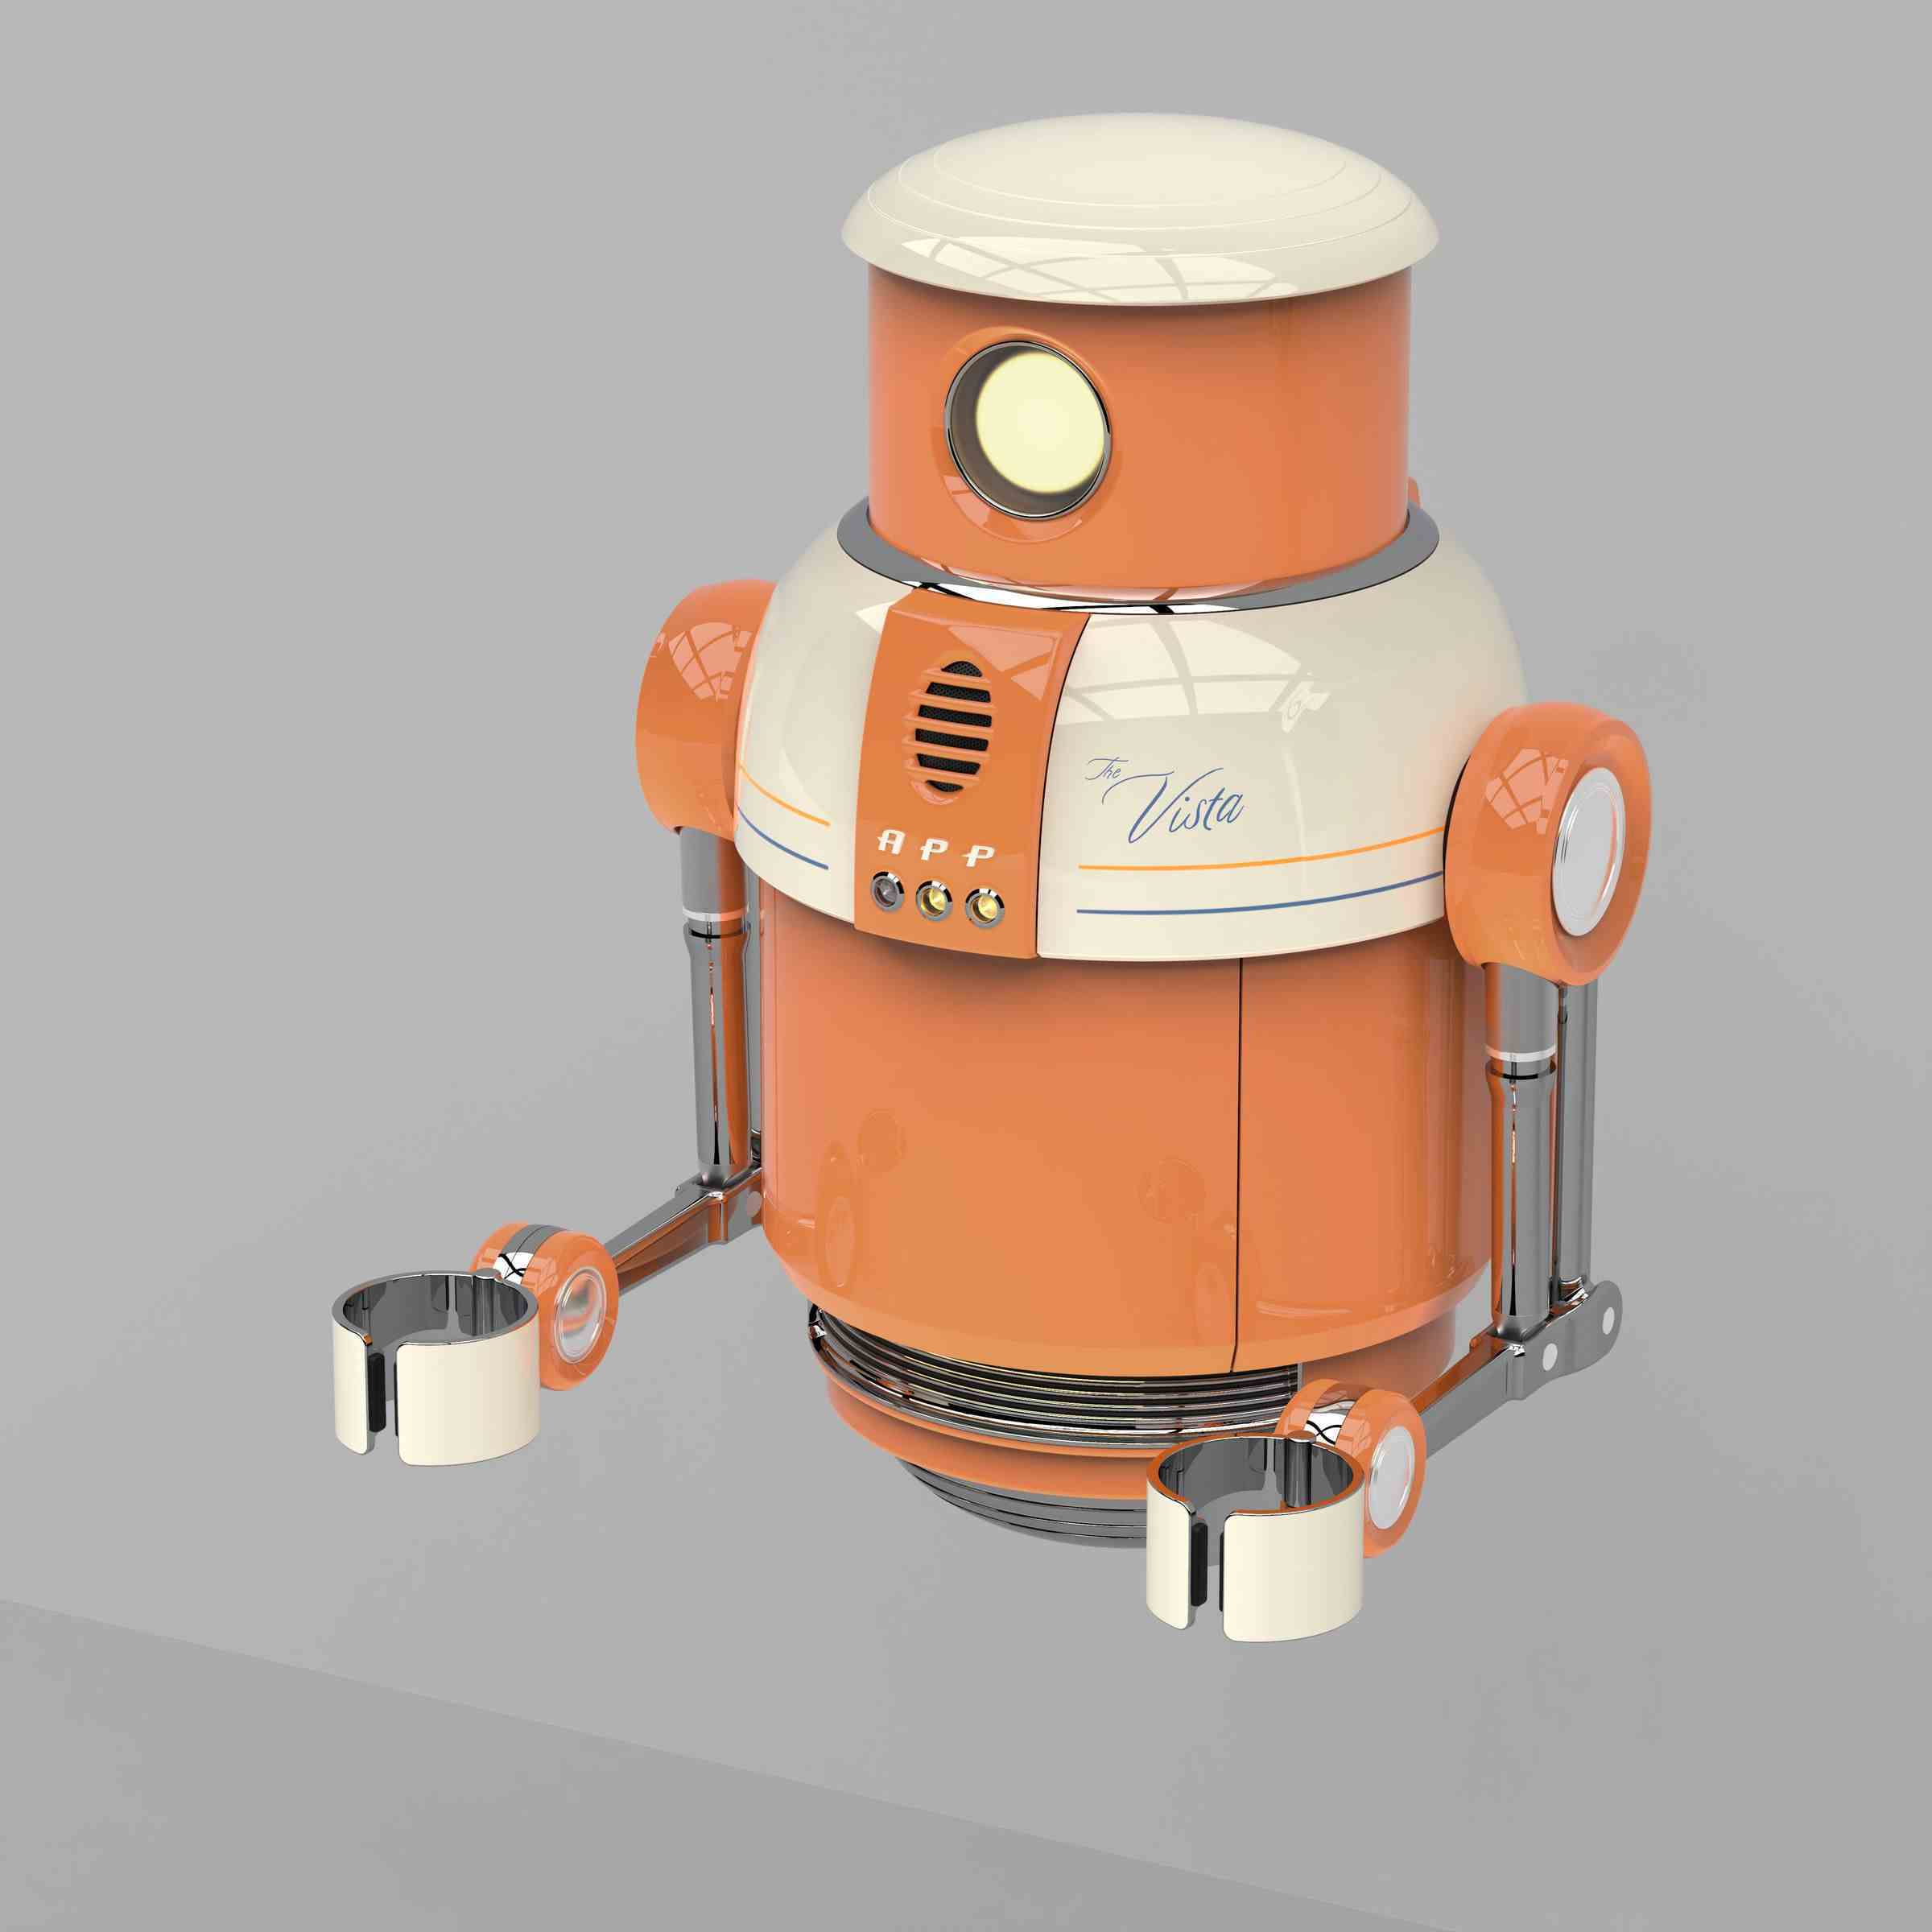 Hello Tomorrow dizisinden bir robotun ilk konsept çizimi.